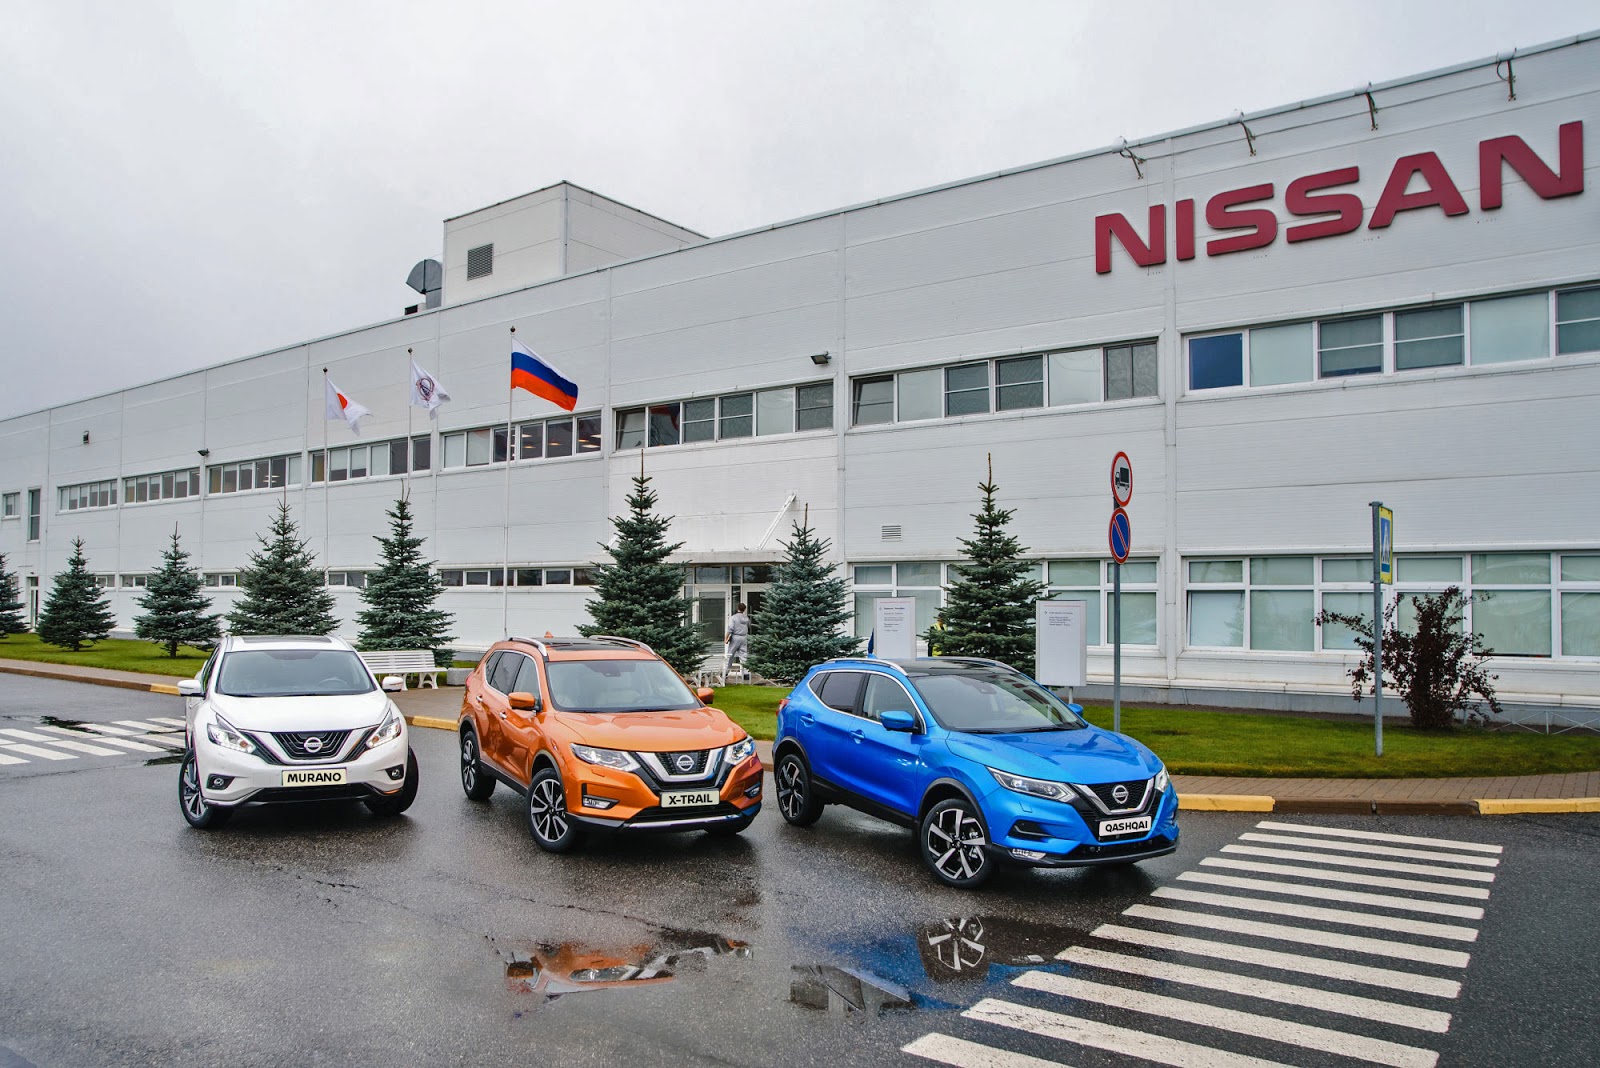 Nissan QASHQAI Russia Εγκαίνια στη γραμμή παραγωγής για το Qashqai στη Ρωσία